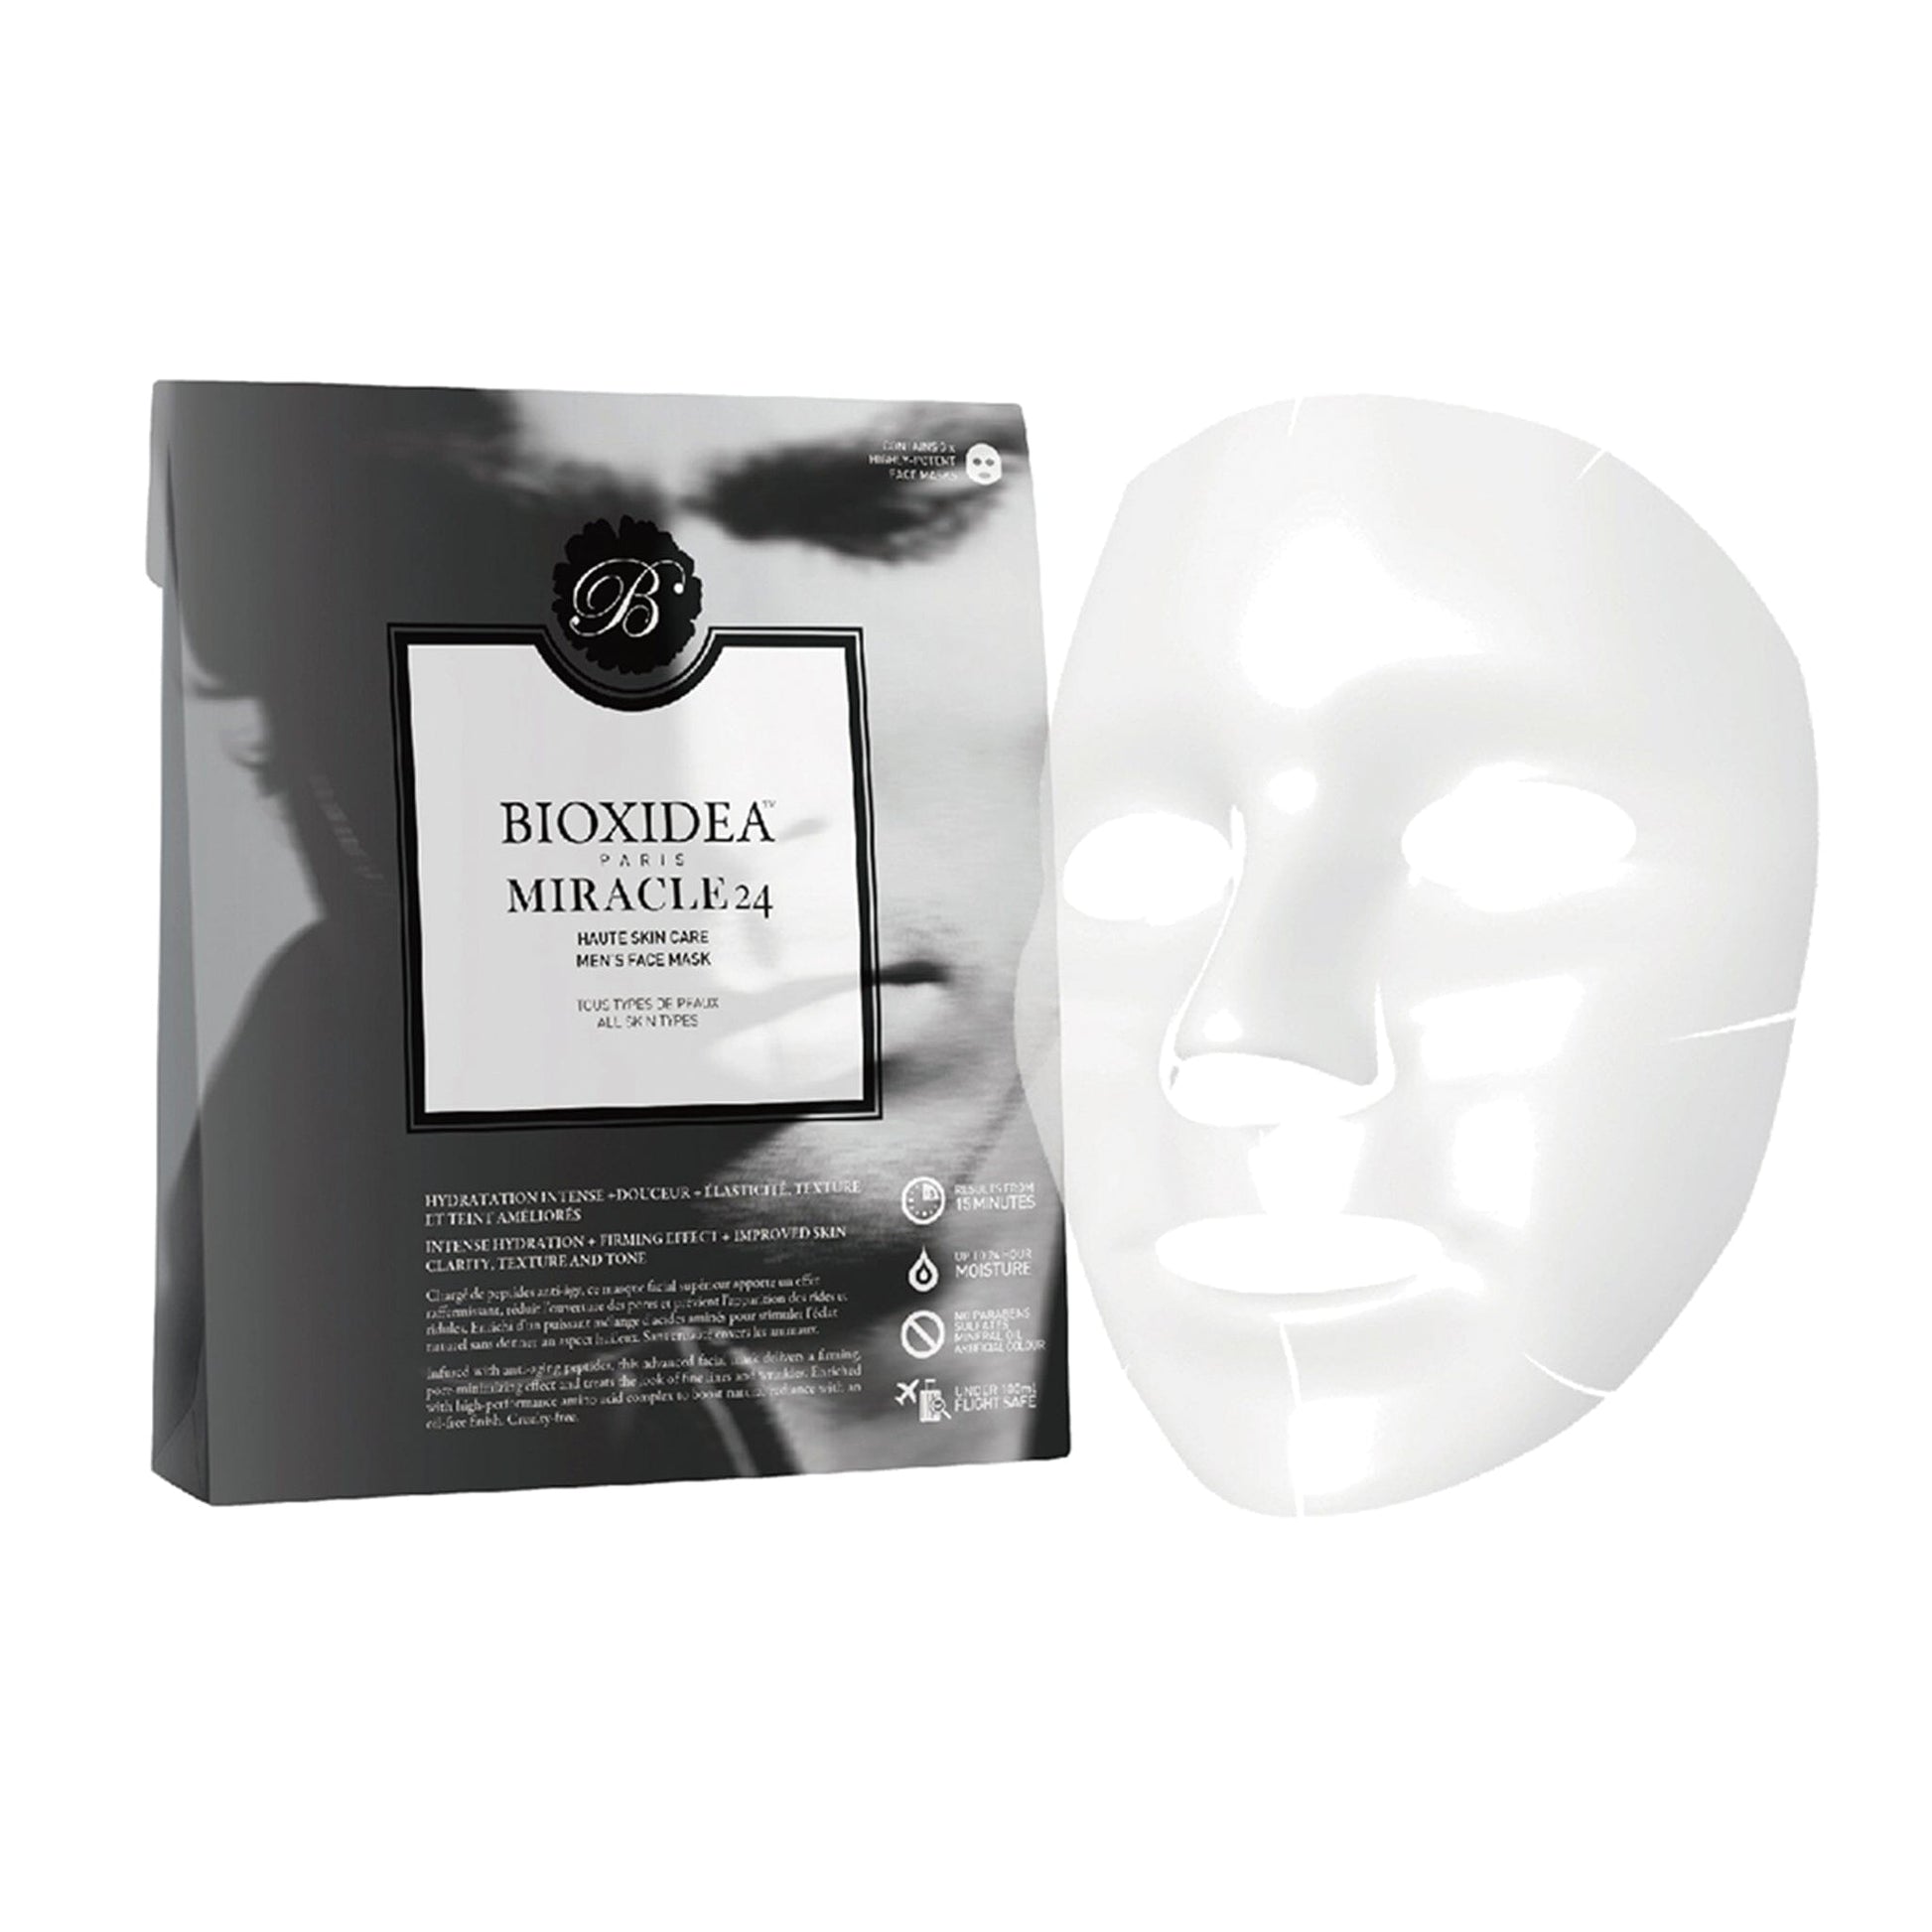 BIOXIDEA Miracle24 Face Mask for Men Mask